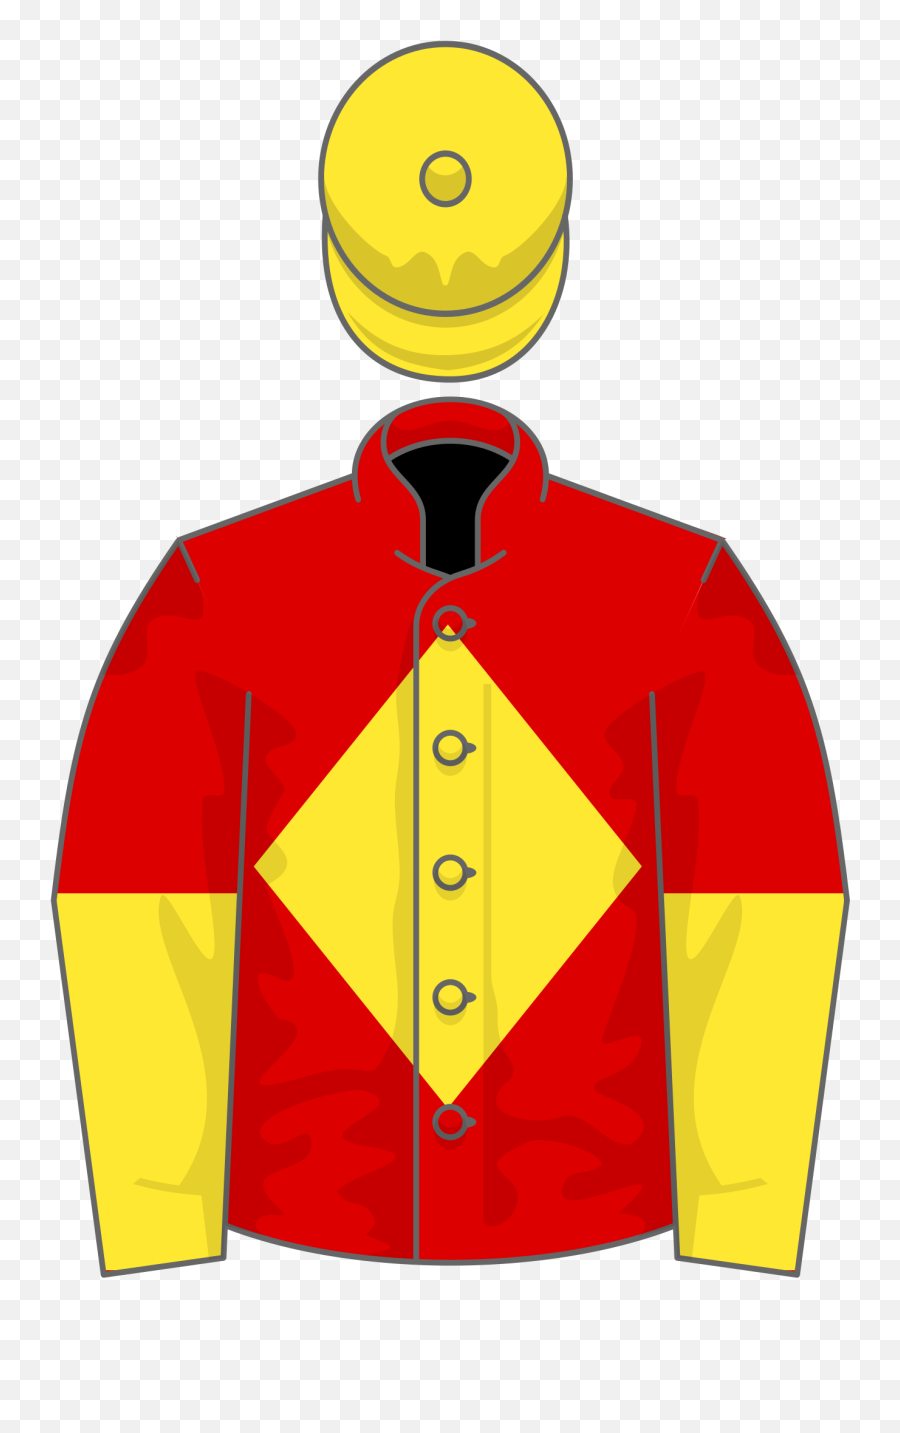 Fileowner J H Shannonsvg - Wikipedia Emoji,Yellow Jacket Clipart